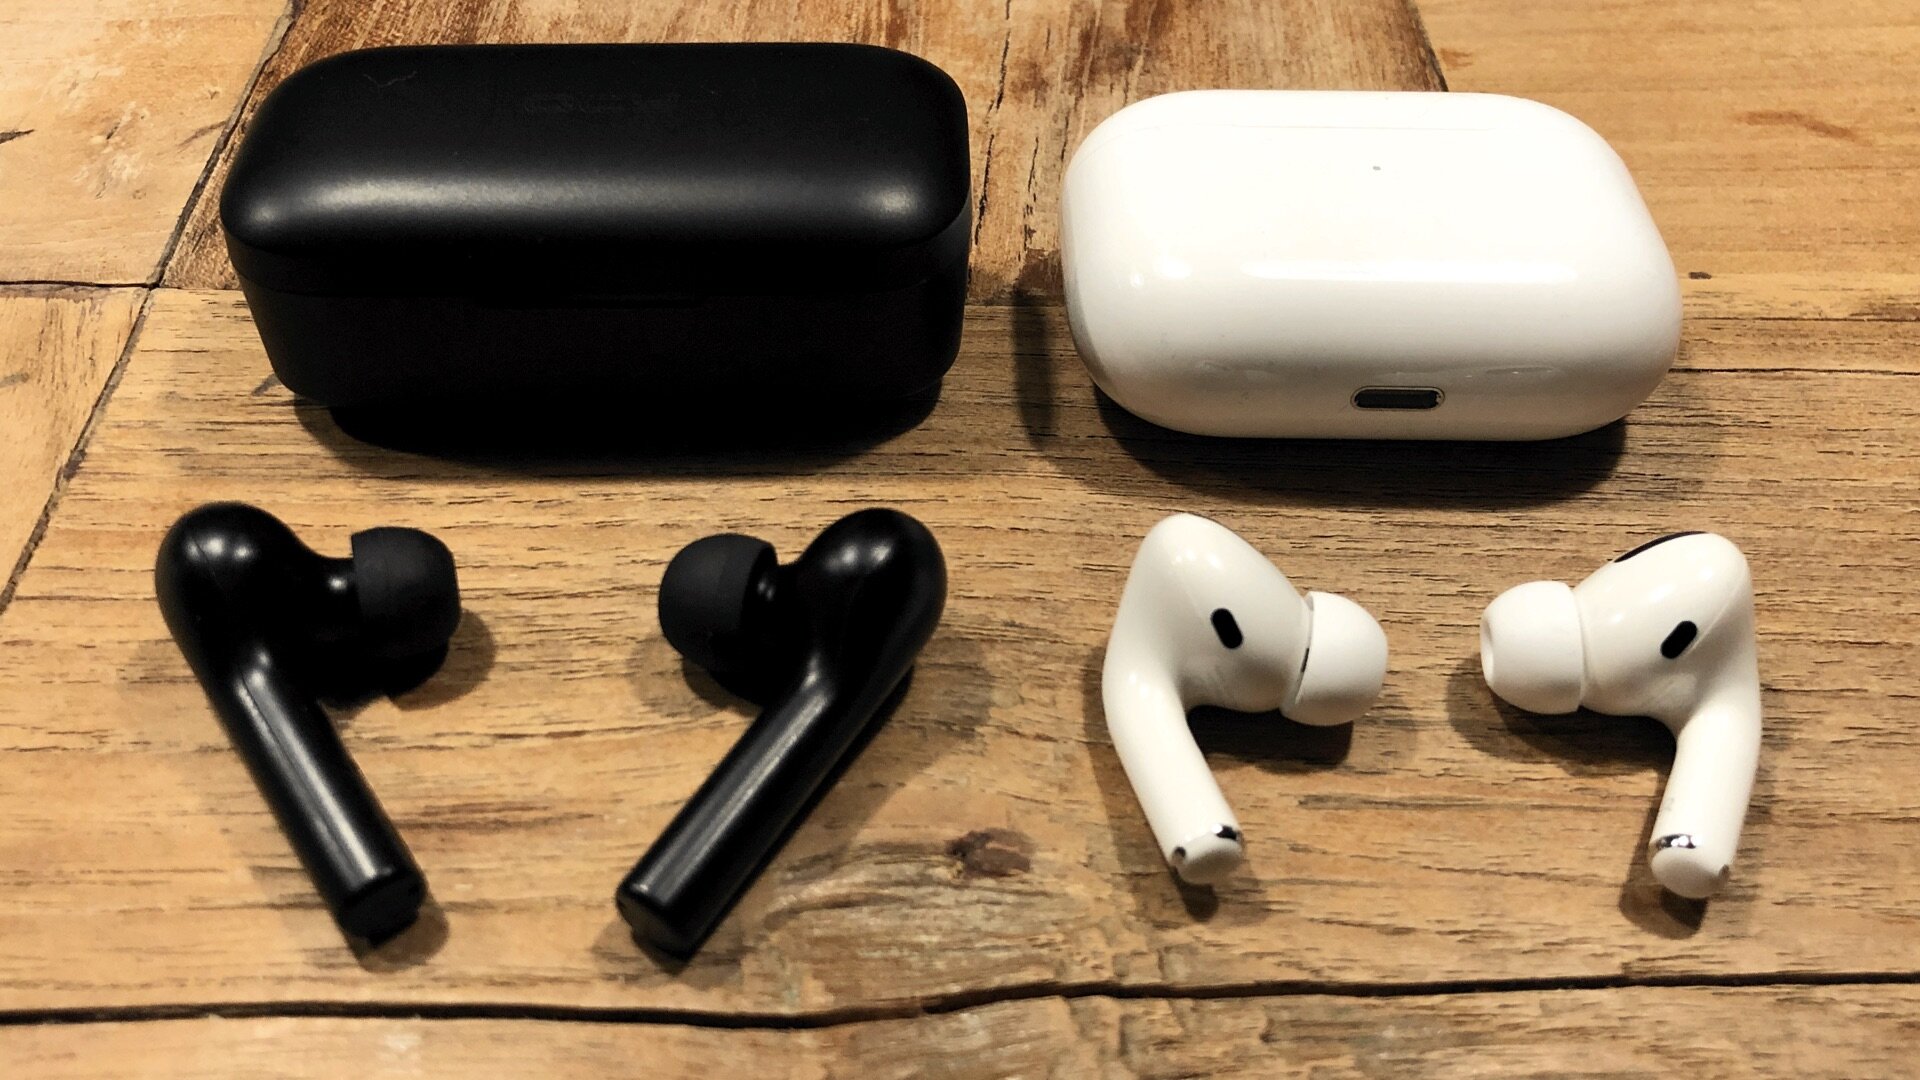 MEGA TEST: Apple AirPods Pro vs Cheap Wireless Earphones